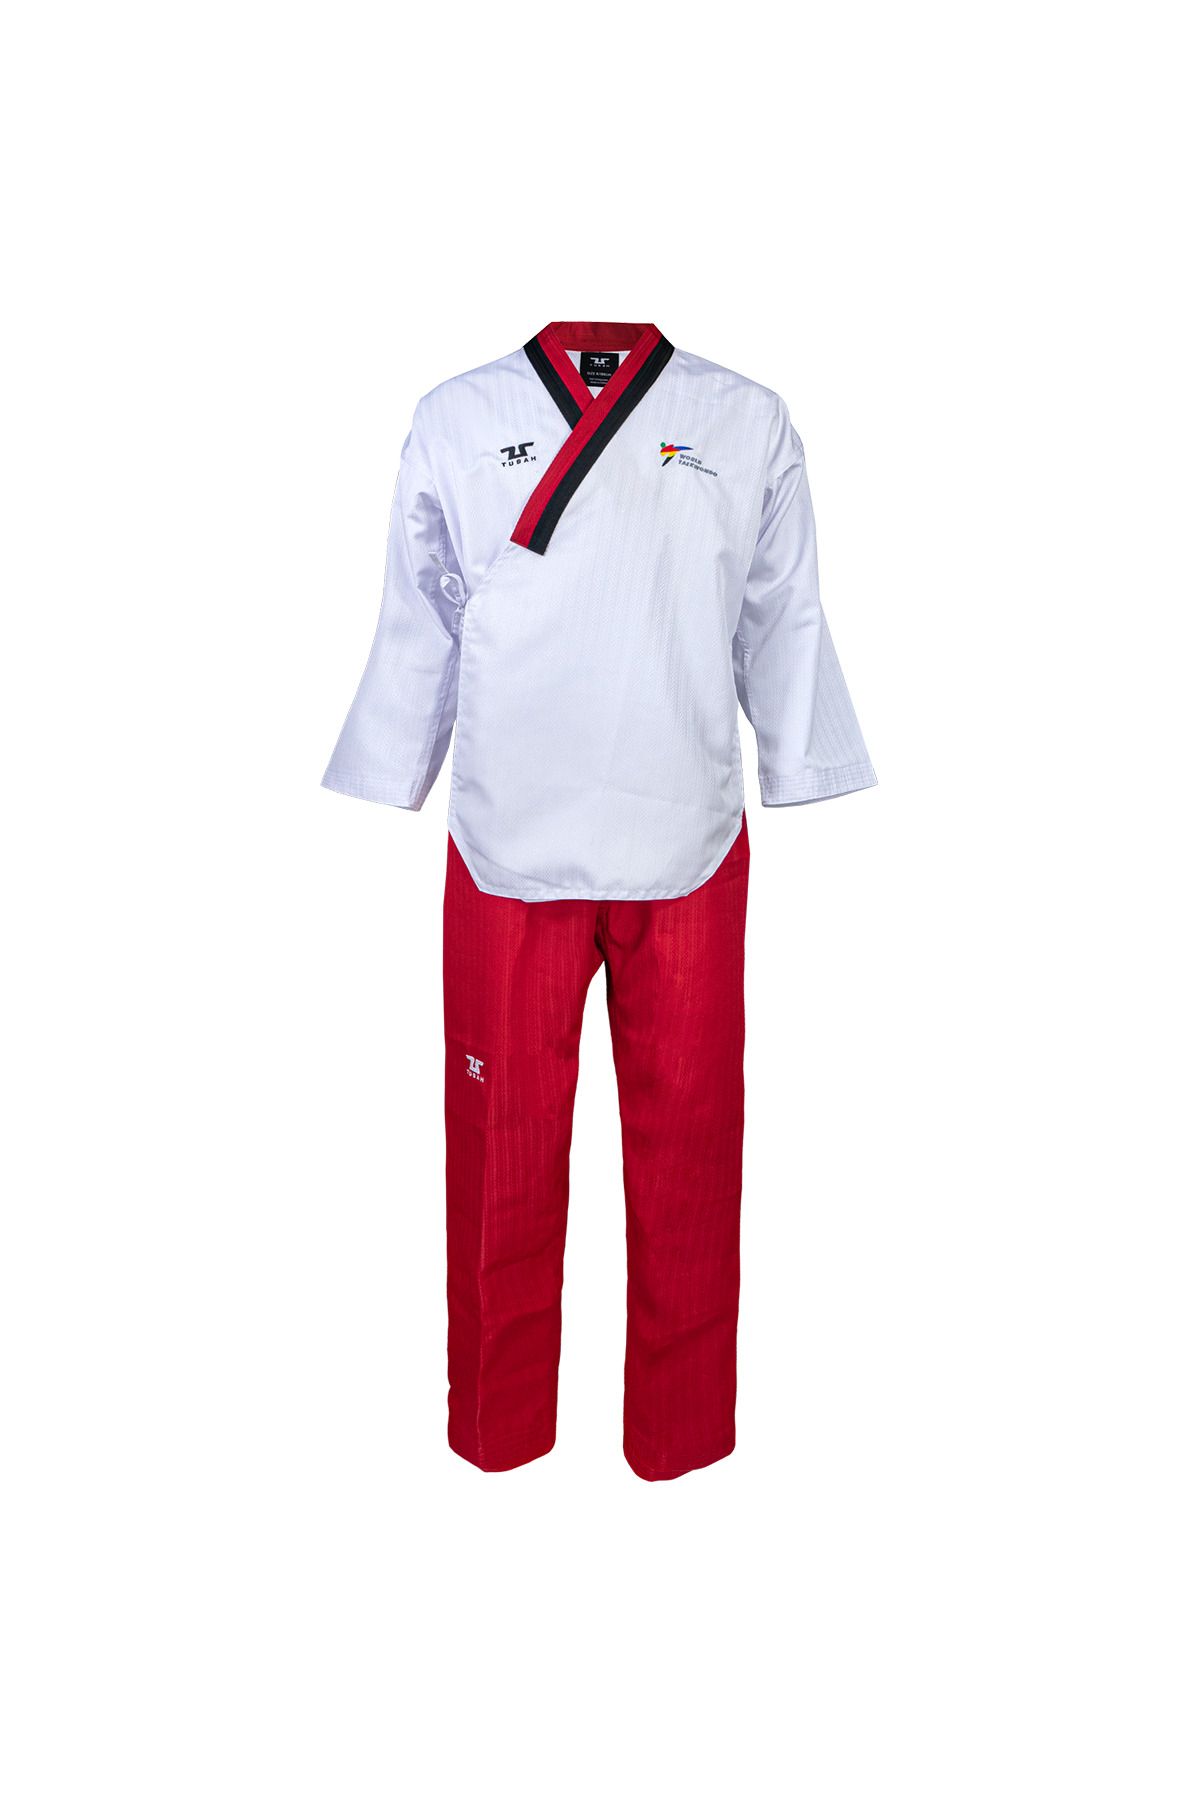 hakuof Taekwondo WT Onaylı Tusah Poomsae Dobok Tekvando Pumse Elbisesi Minik Yıldız Kız